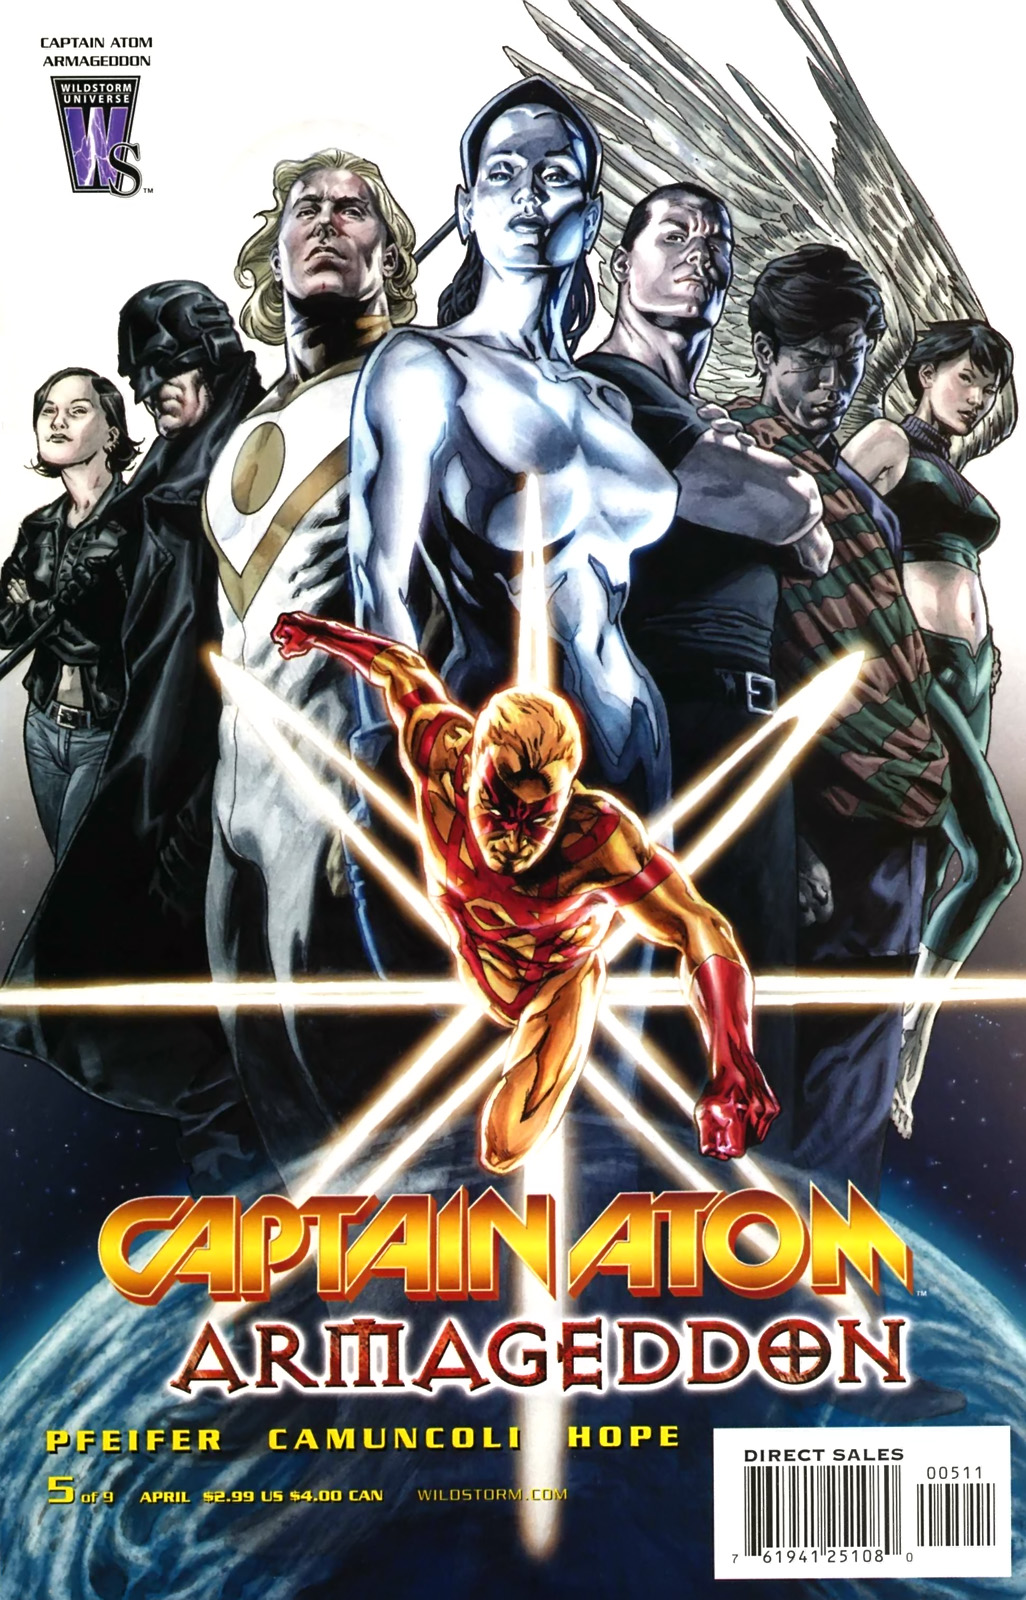 Captain Atom: Armageddon Vol 1 5 | DC Database | Fandom